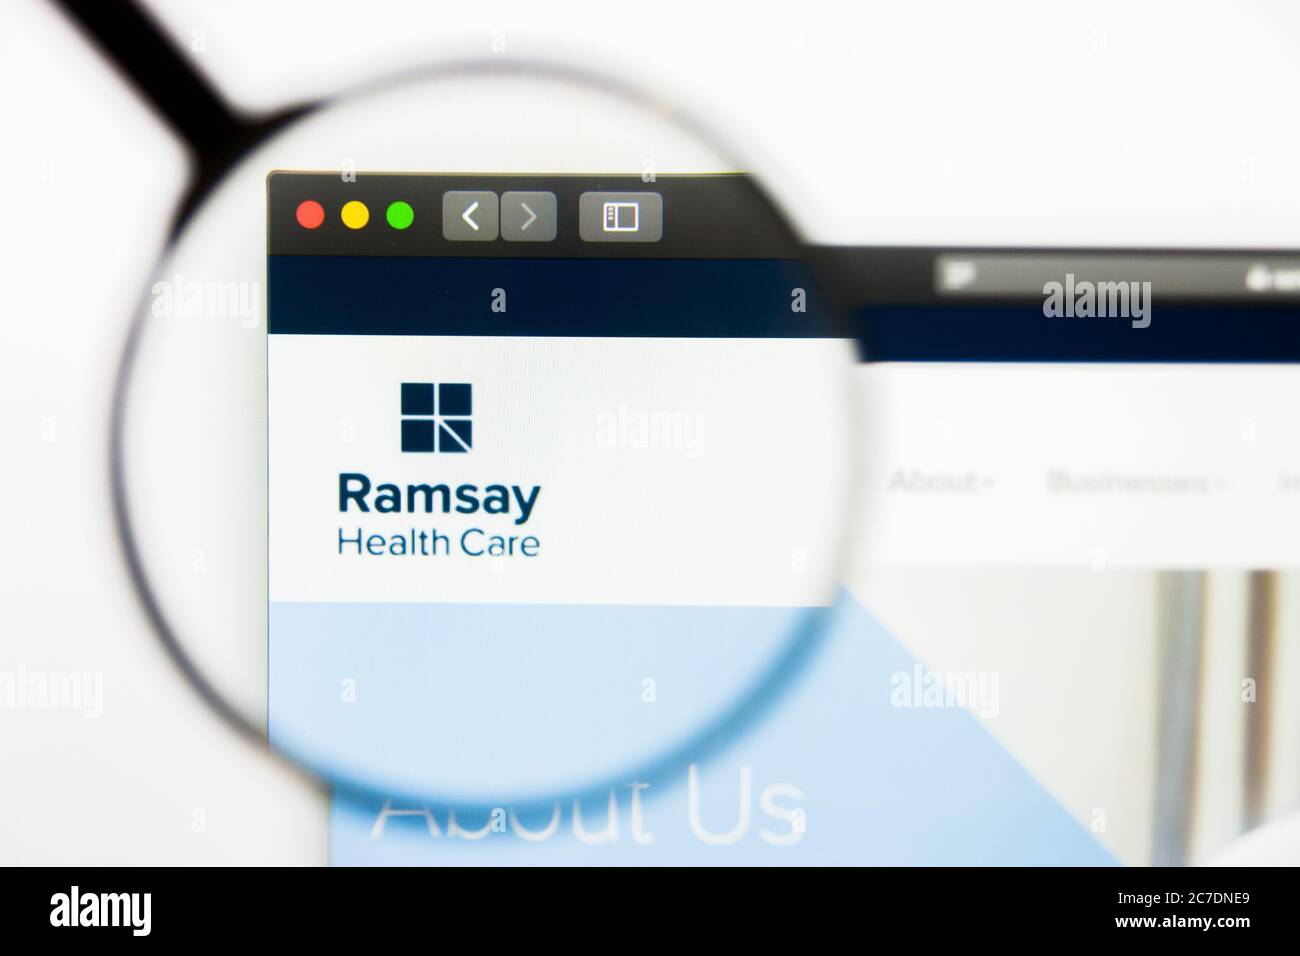 https://c8.alamy.com/comp/2C7DNE9/los-angeles-california-usa-13-march-2019-illustrative-editorial-ramsay-health-care-website-homepage-ramsay-health-care-logo-visible-on-display-2C7DNE9.jpg